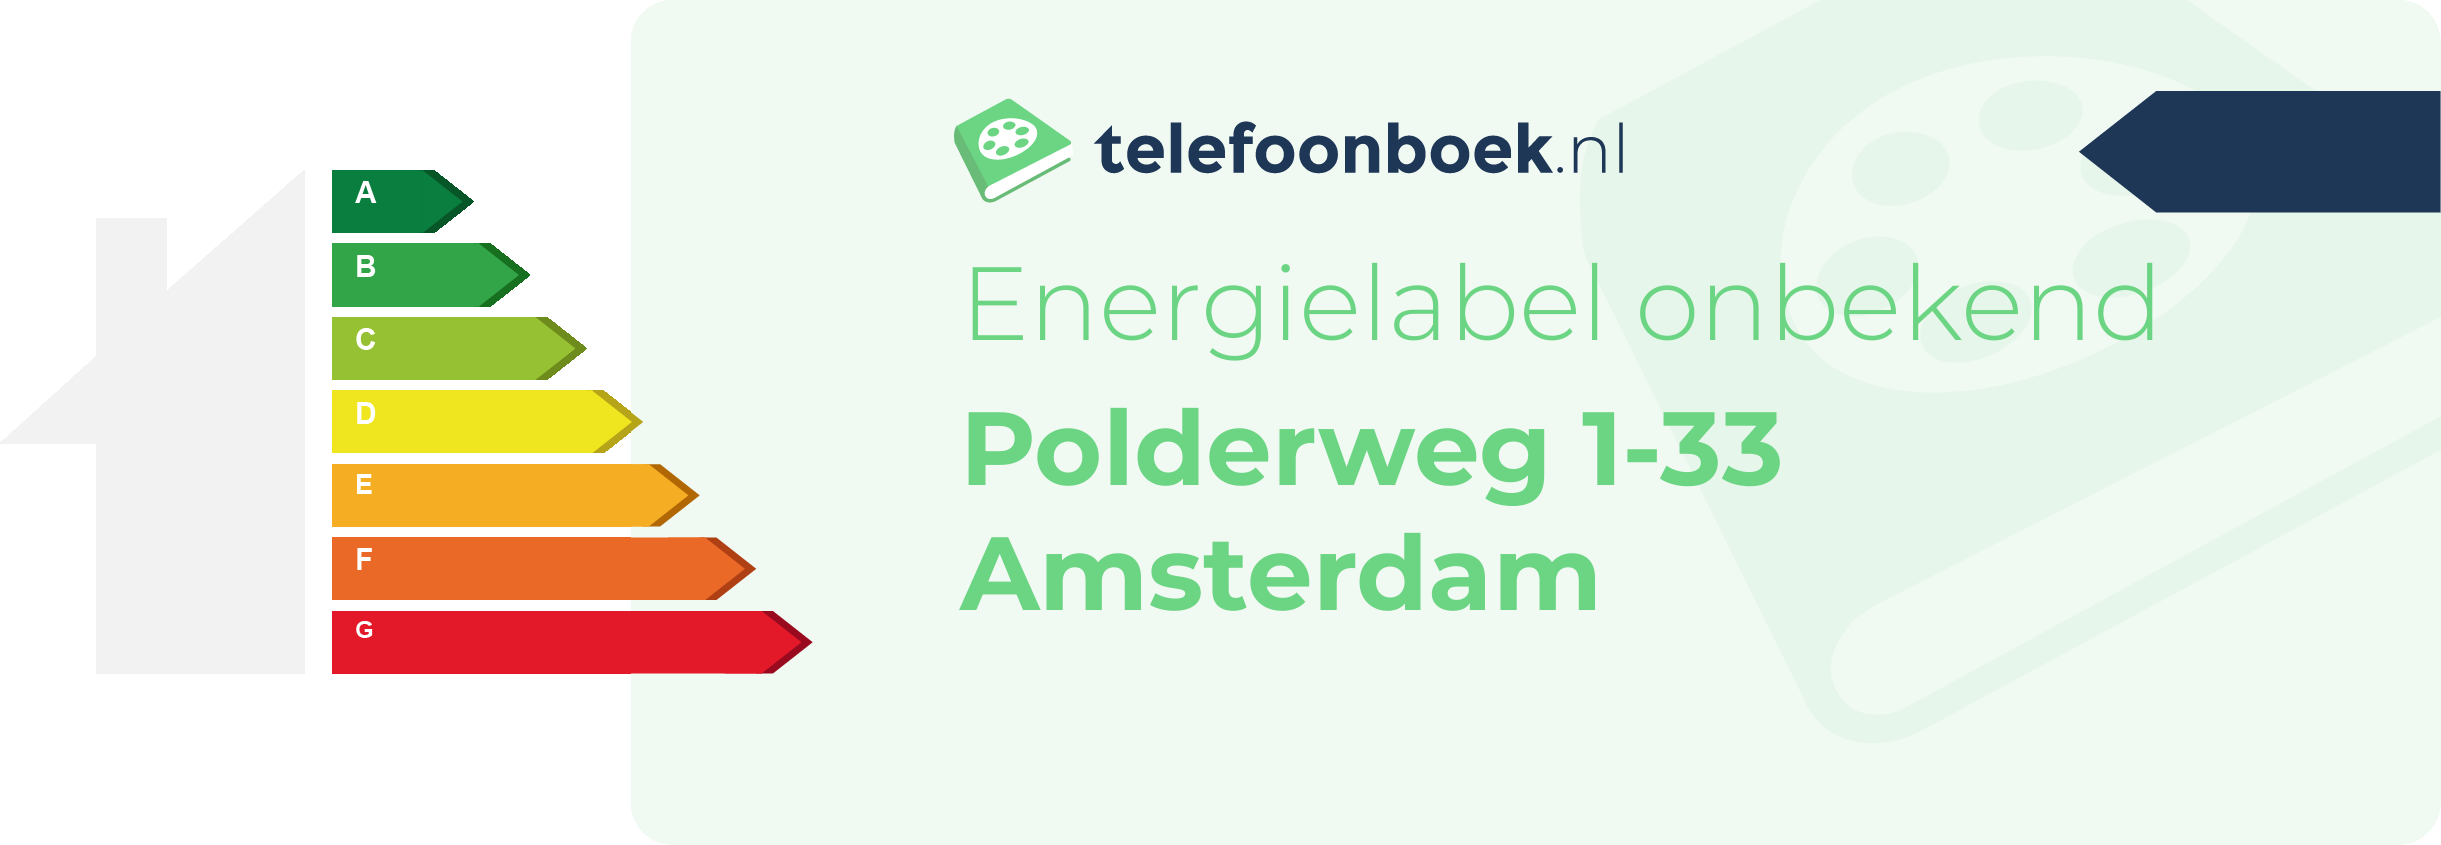 Energielabel Polderweg 1-33 Amsterdam